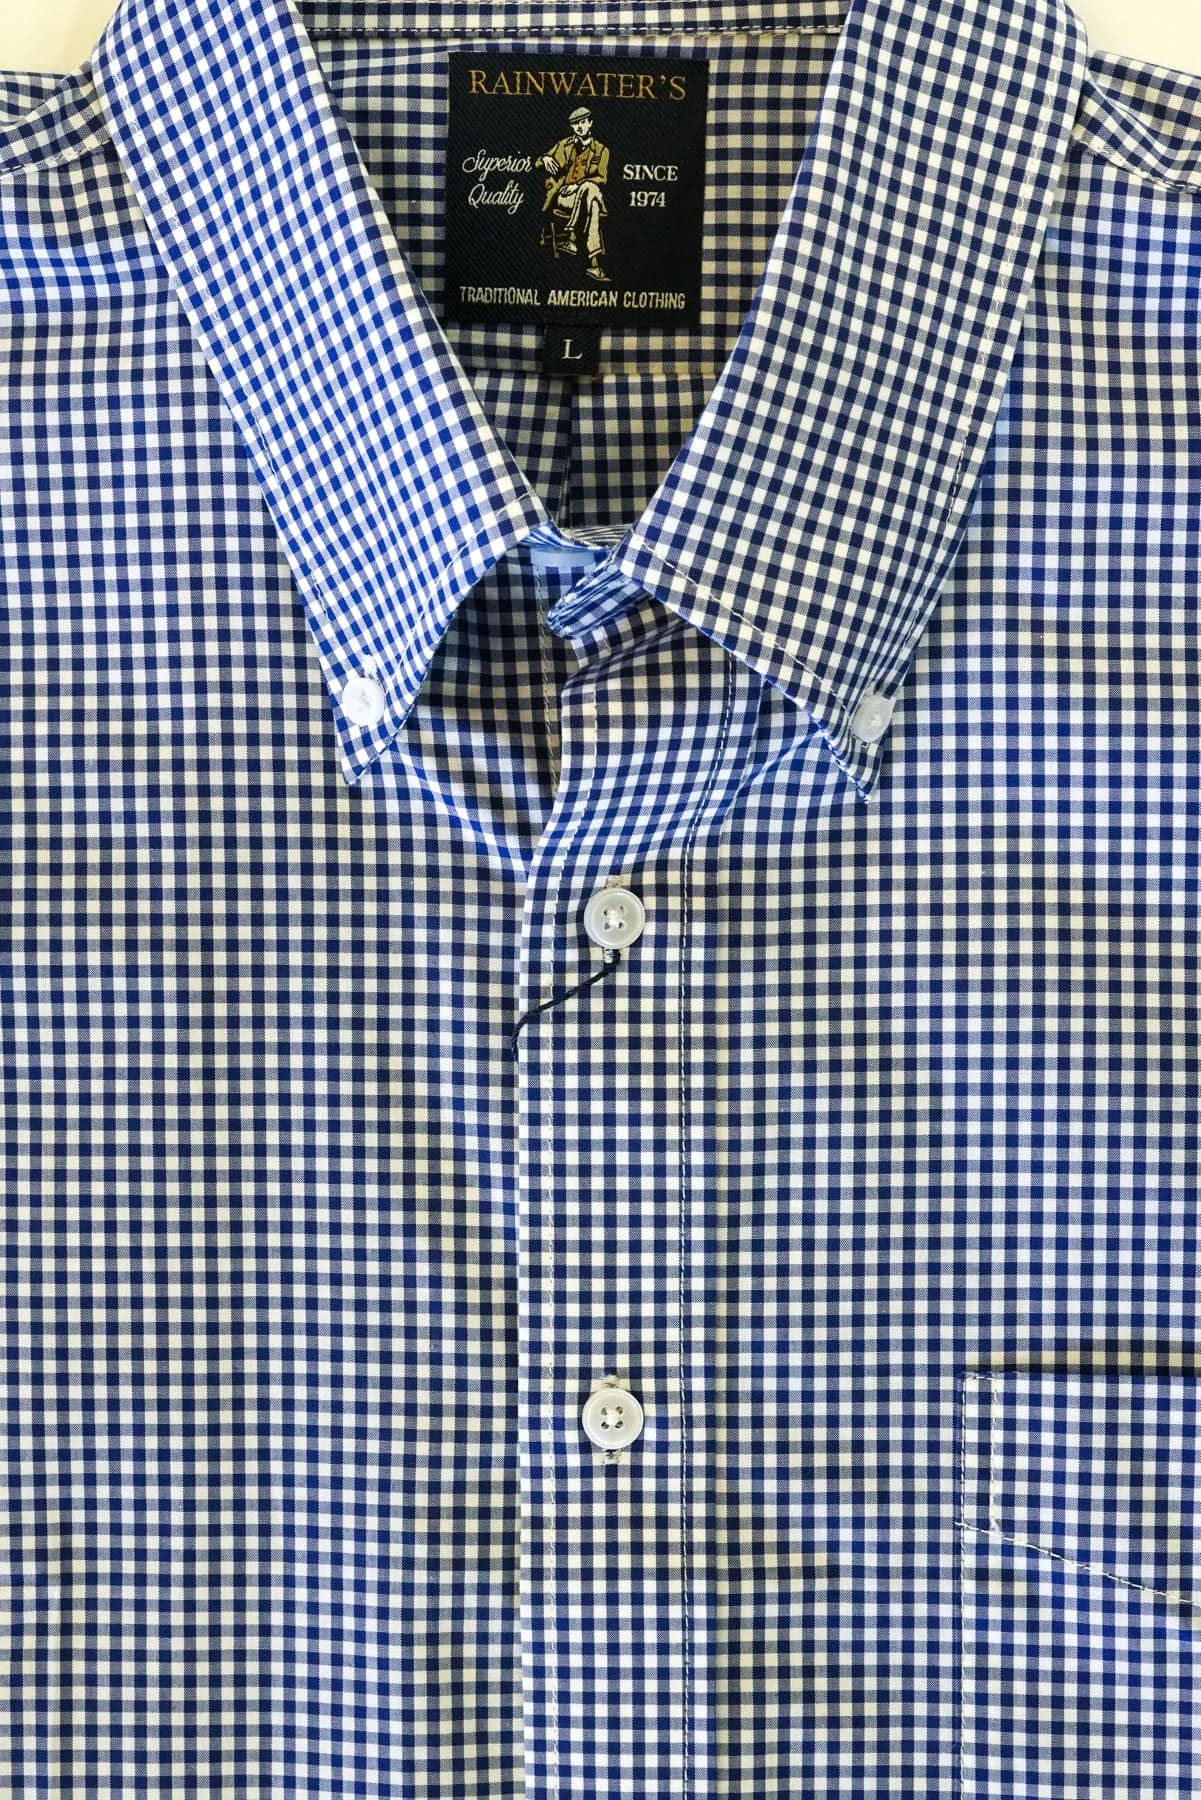 Navy & White Gingham Button Down Sport Shirt by Rainwater's - Rainwater's Men's Clothing and Tuxedo Rental